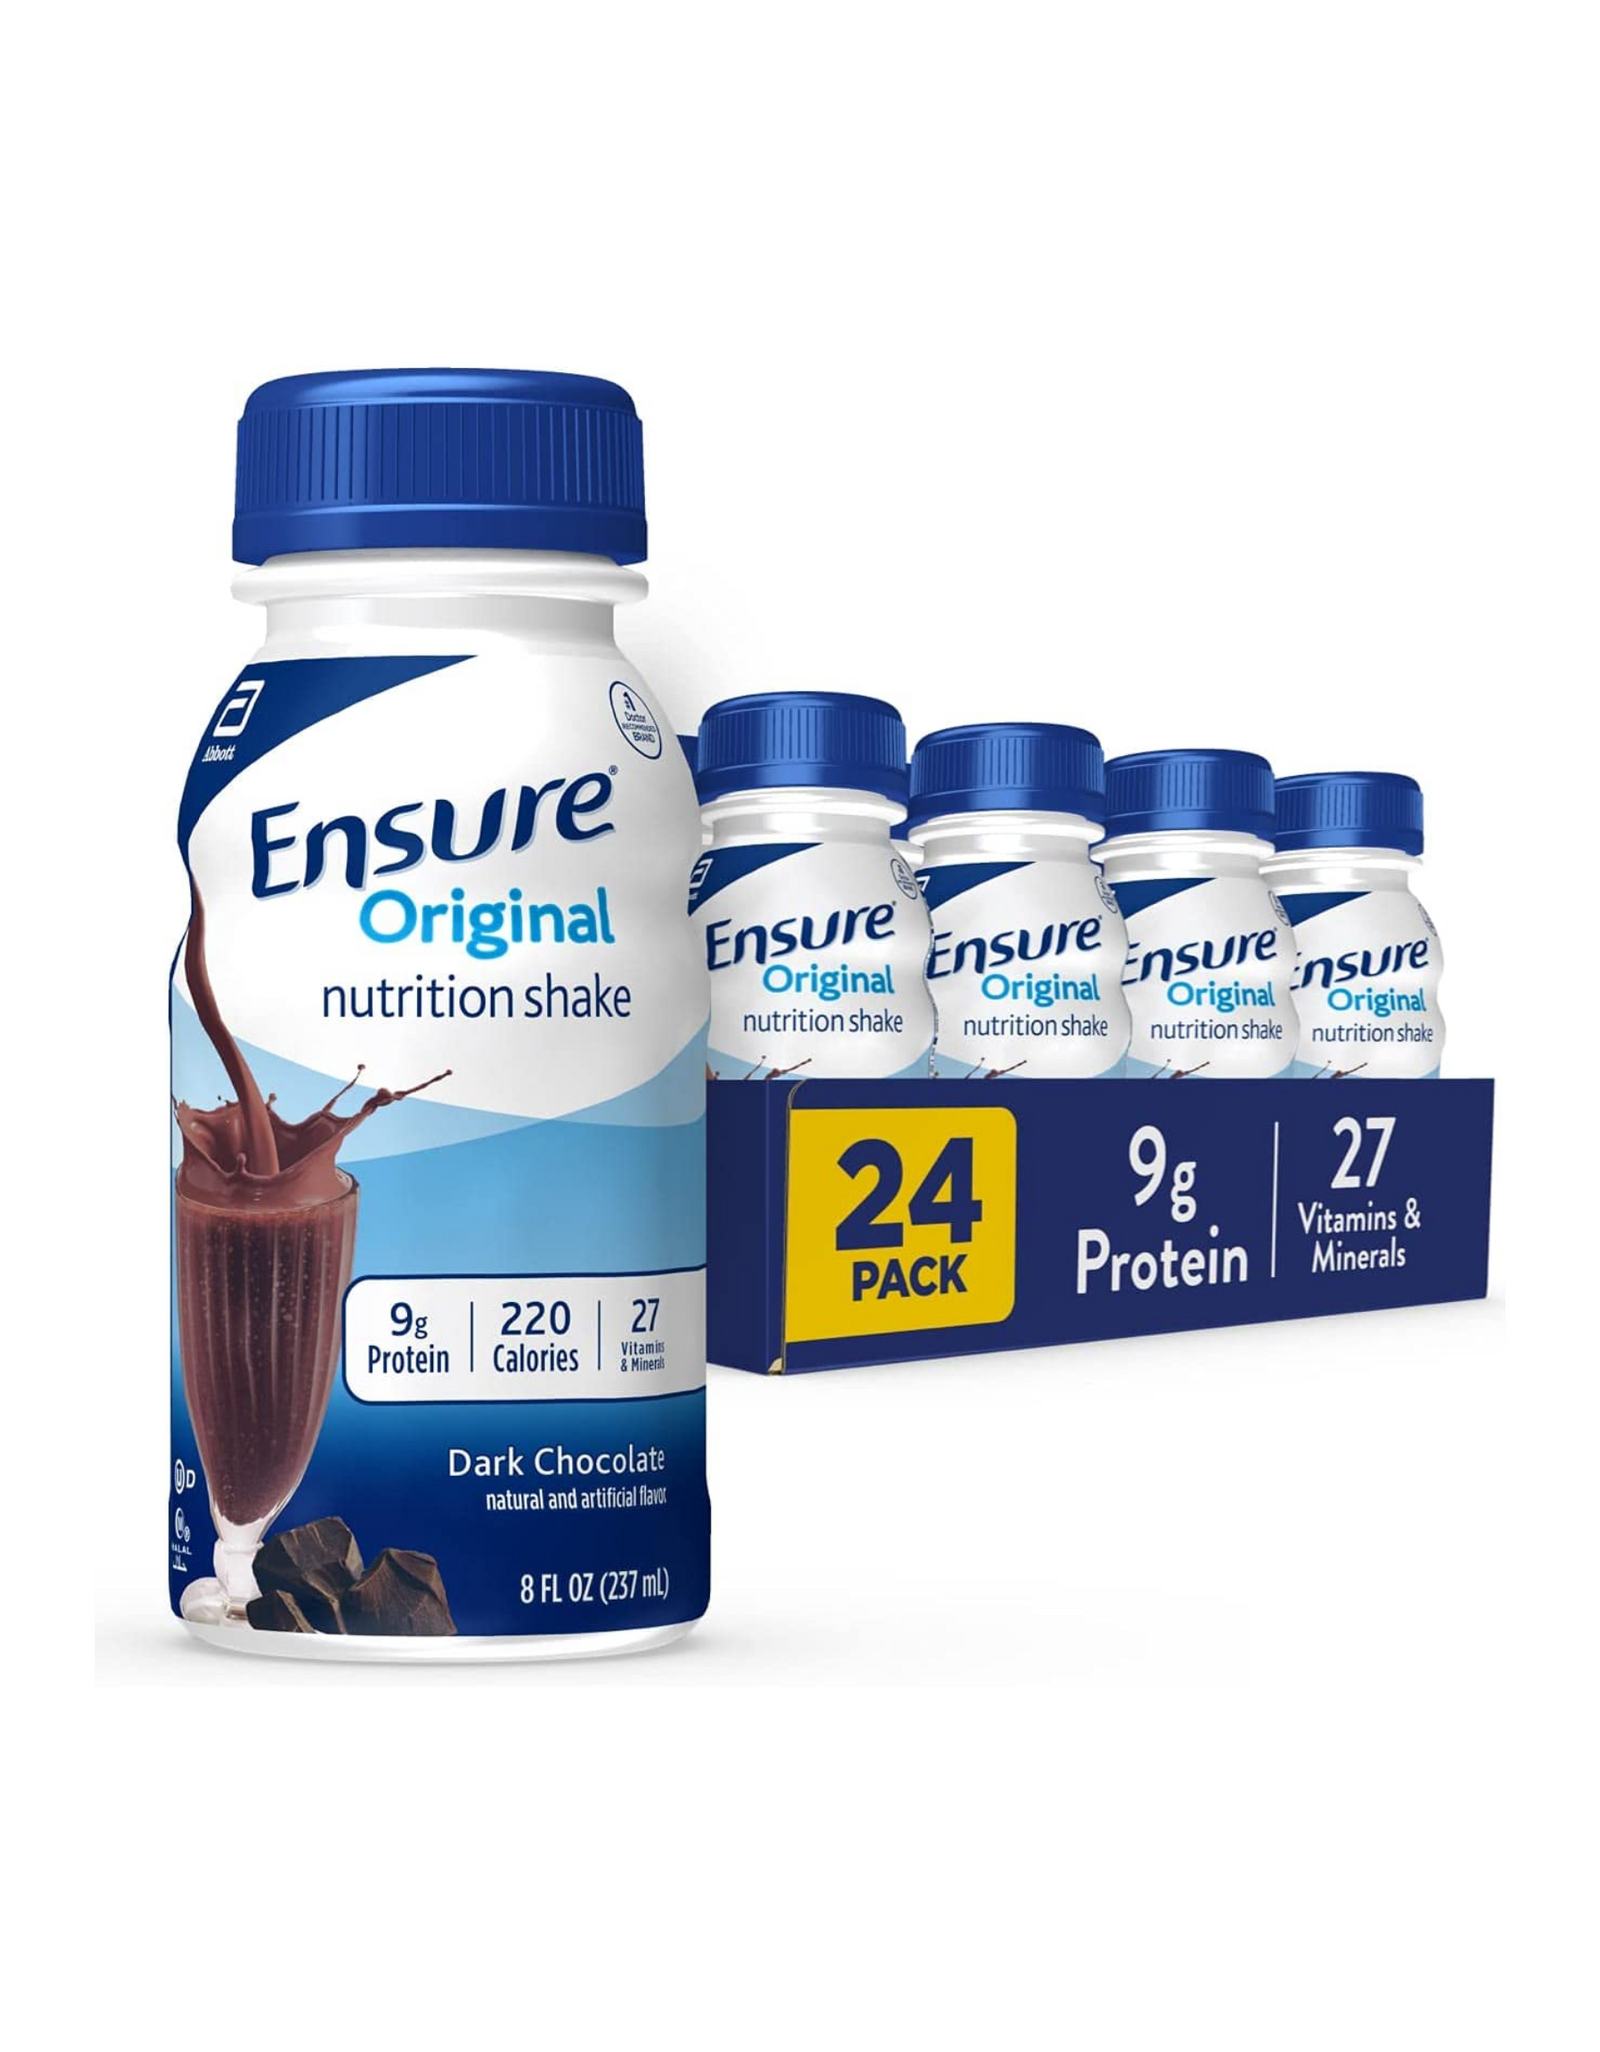 Ensure Original Nutrition Shake with Fiber, Dark Chocolate, 8 fl oz, 24 Ct